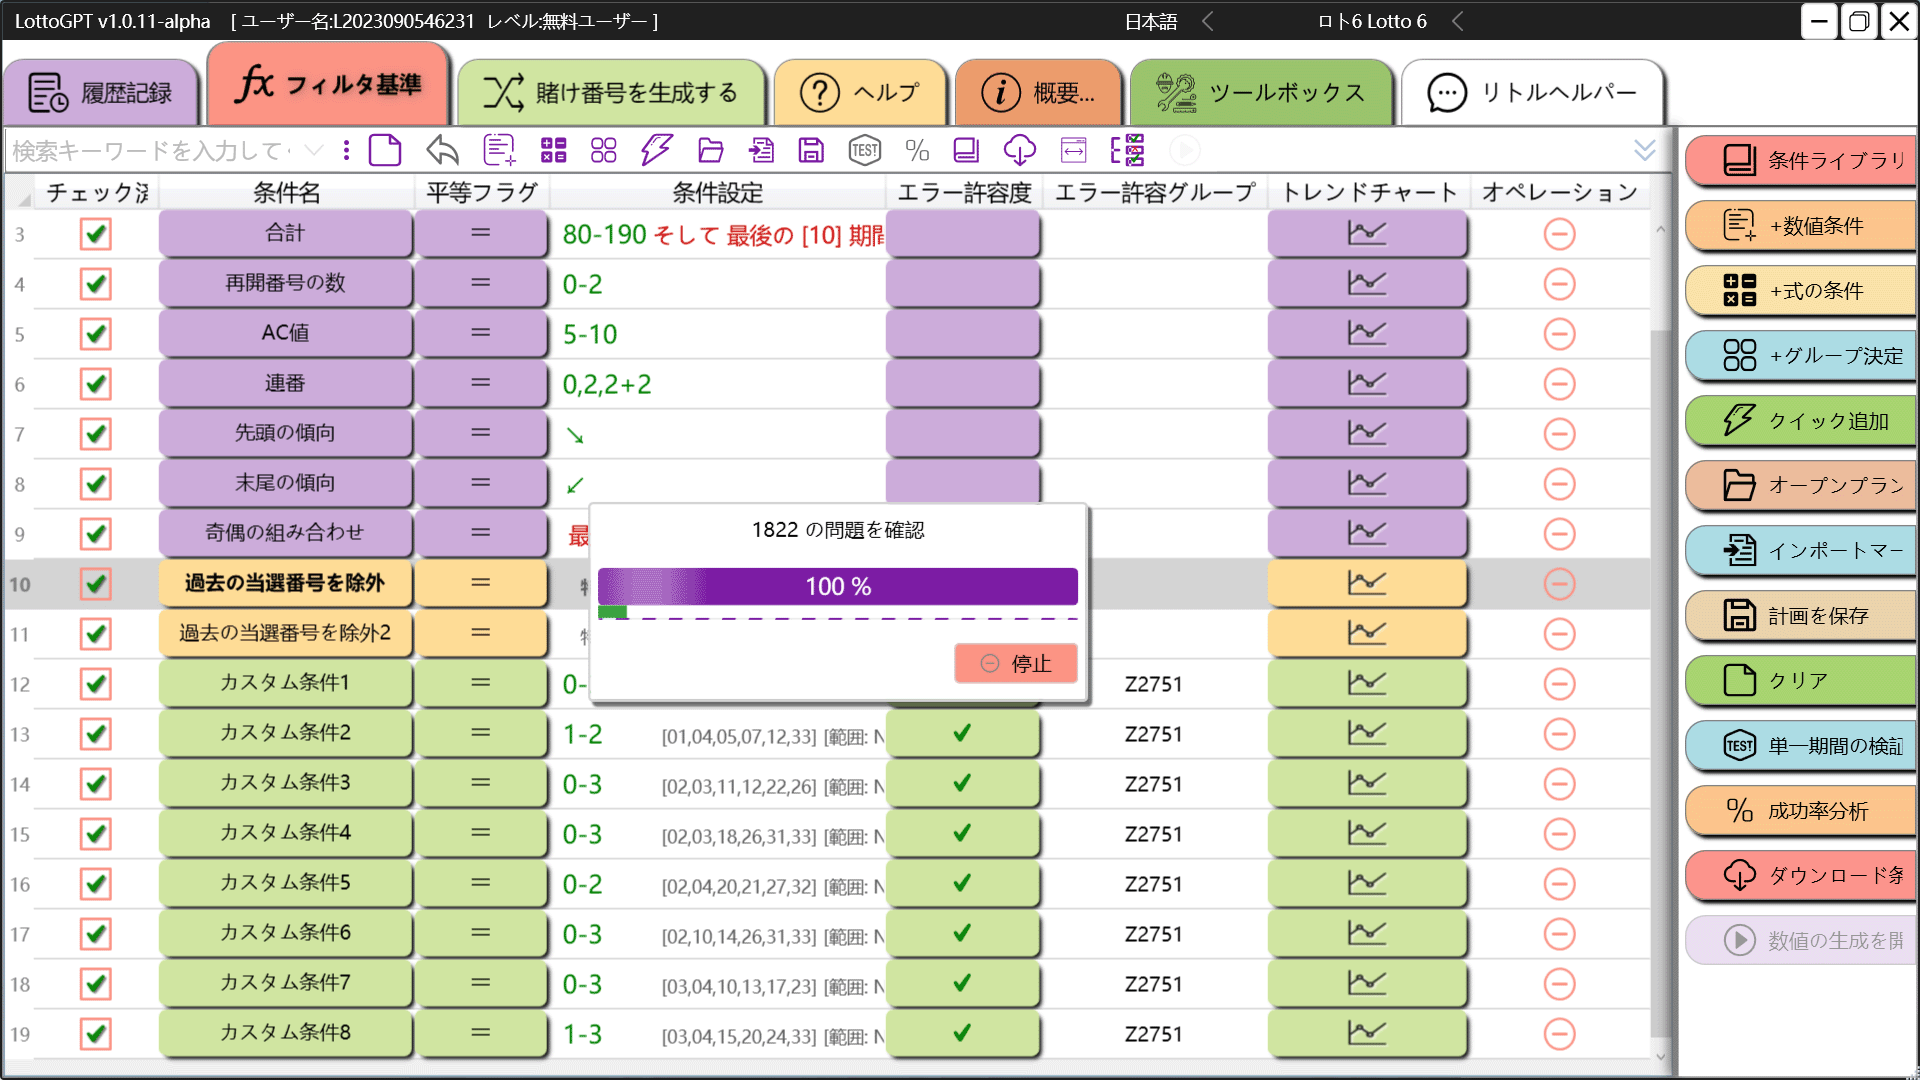 screenshot of lottoGPT interface 7